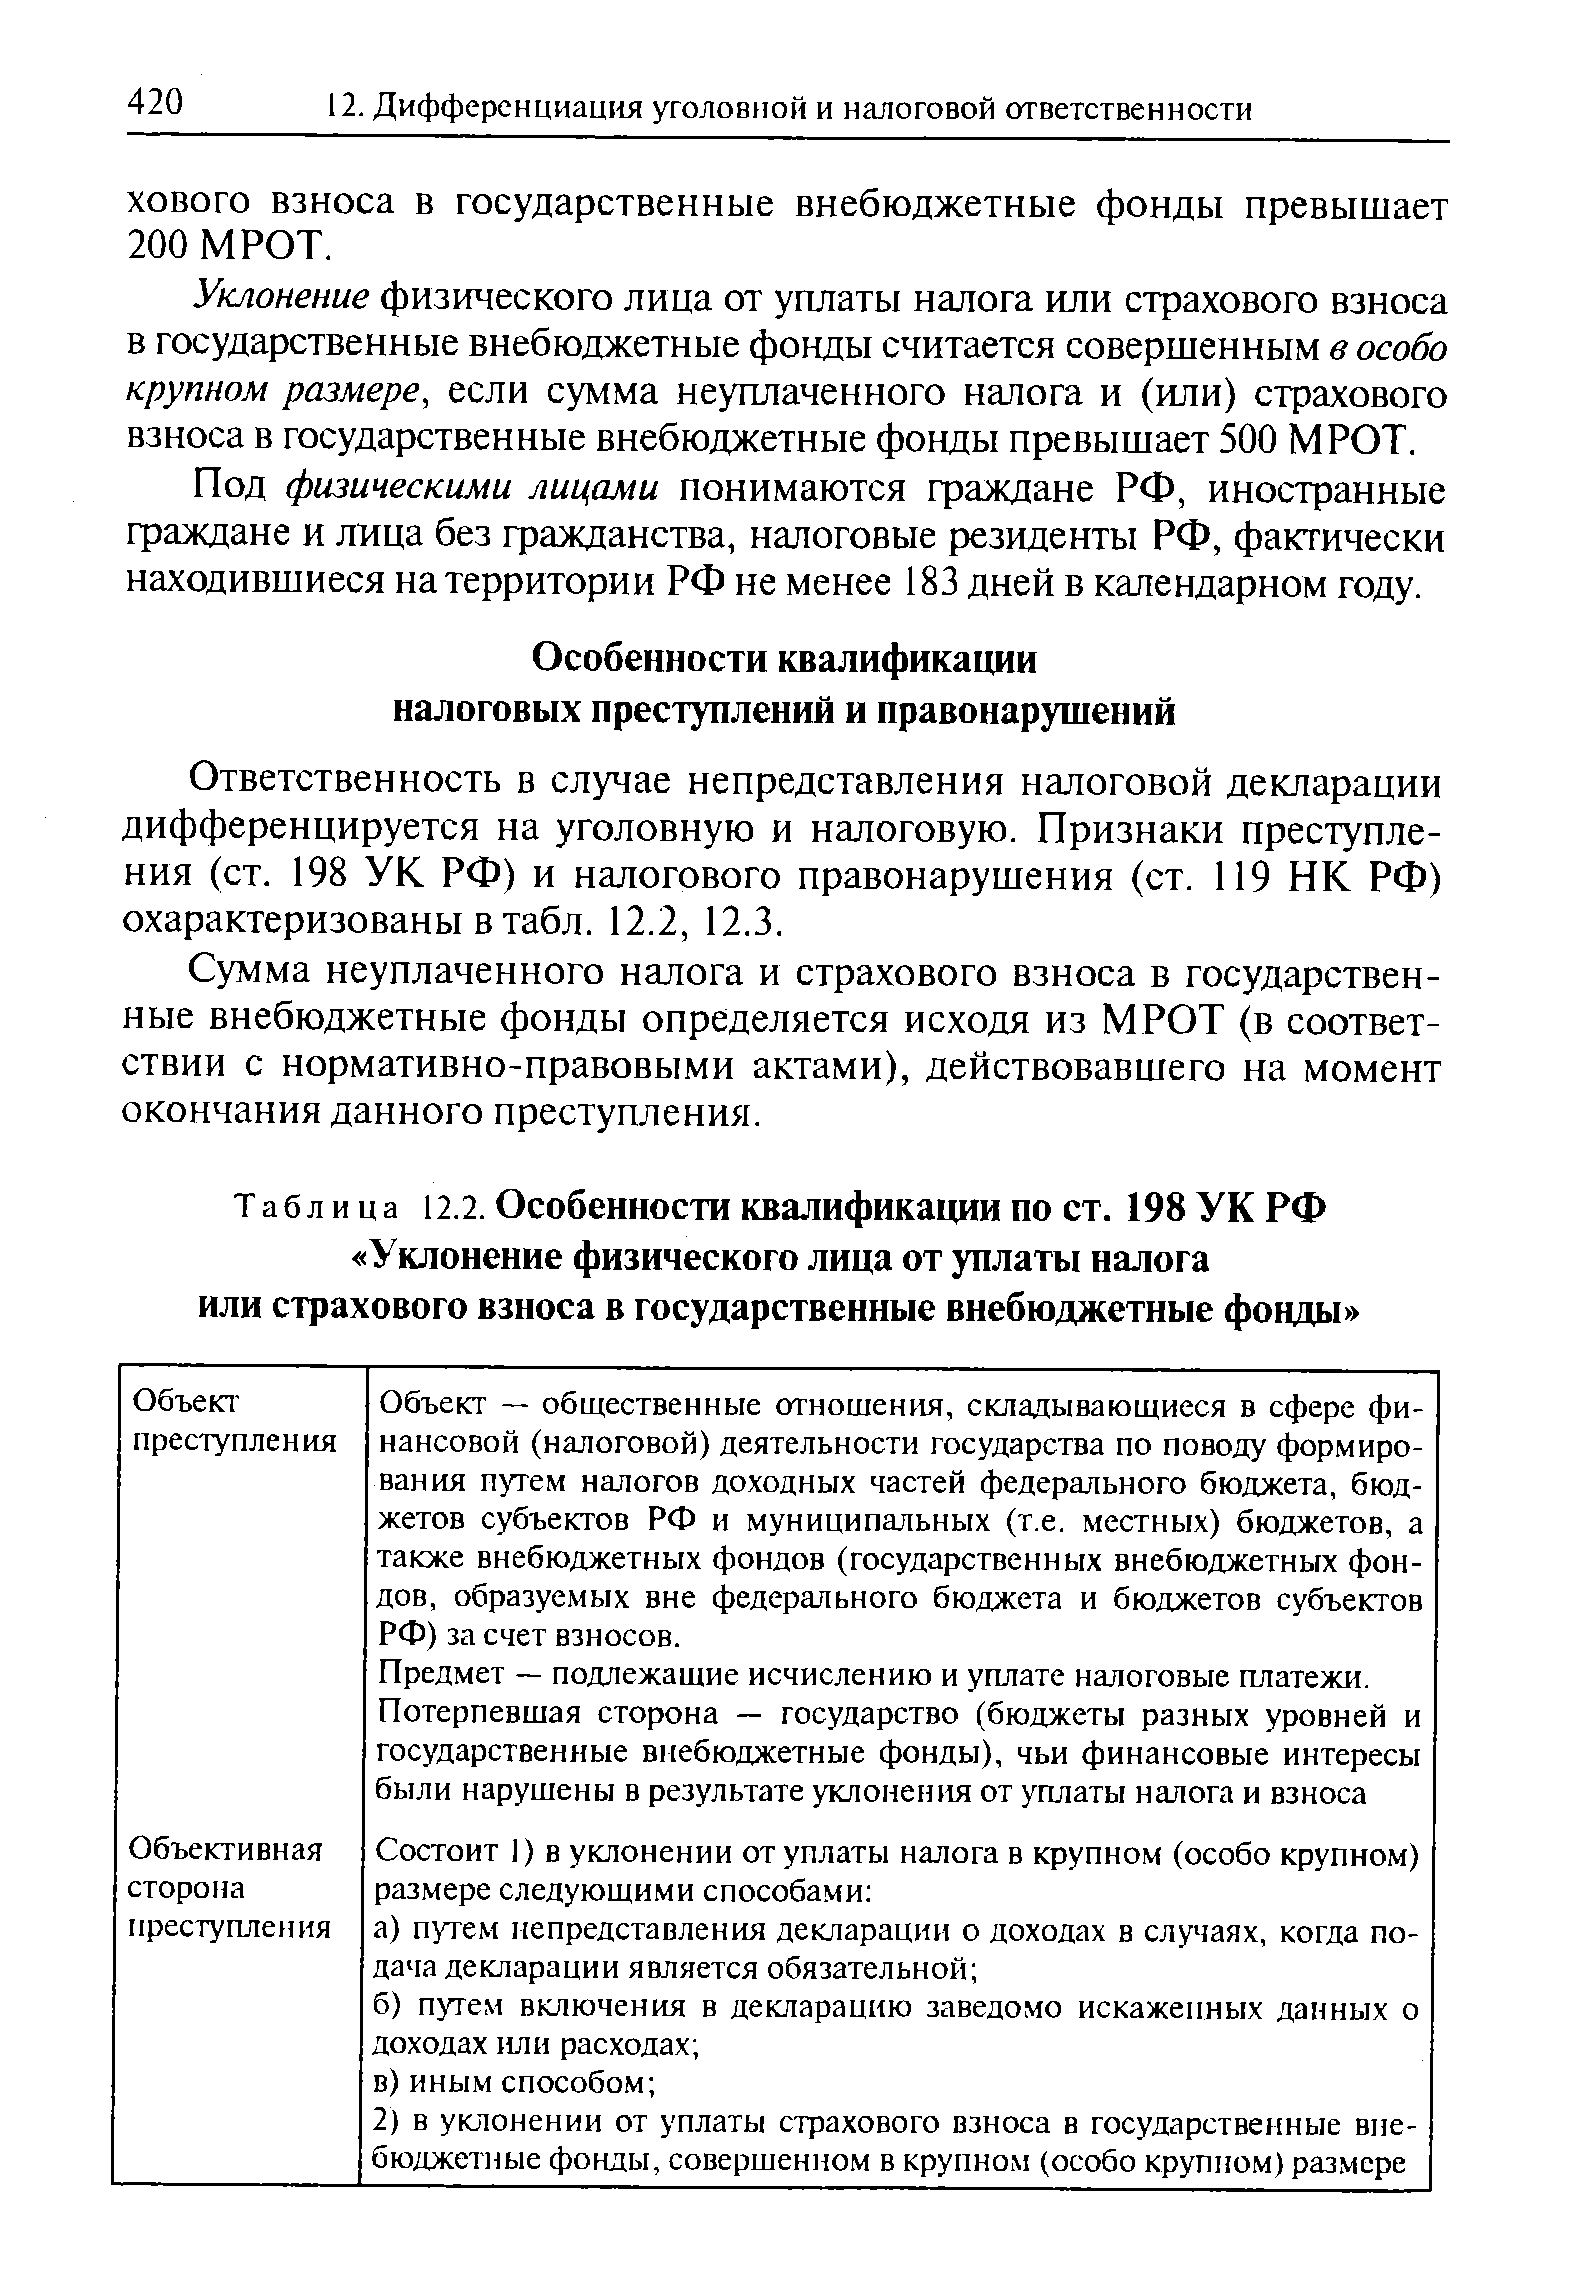 Таблица 12.2. Особенности квалификации по ст. 198 УК РФ
